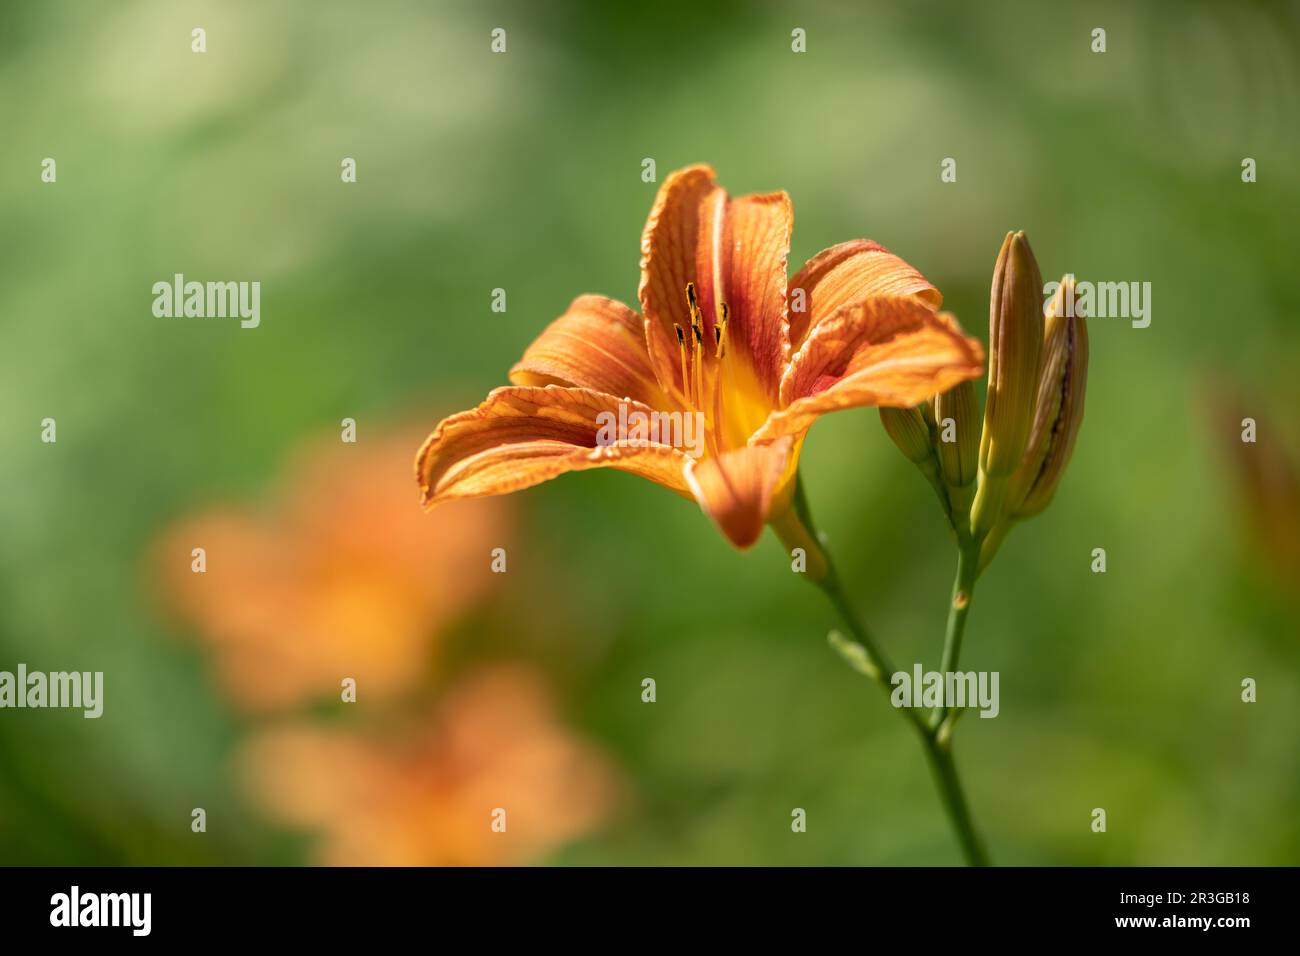 Orange Hemerocallis flowers in a garden Stock Photo